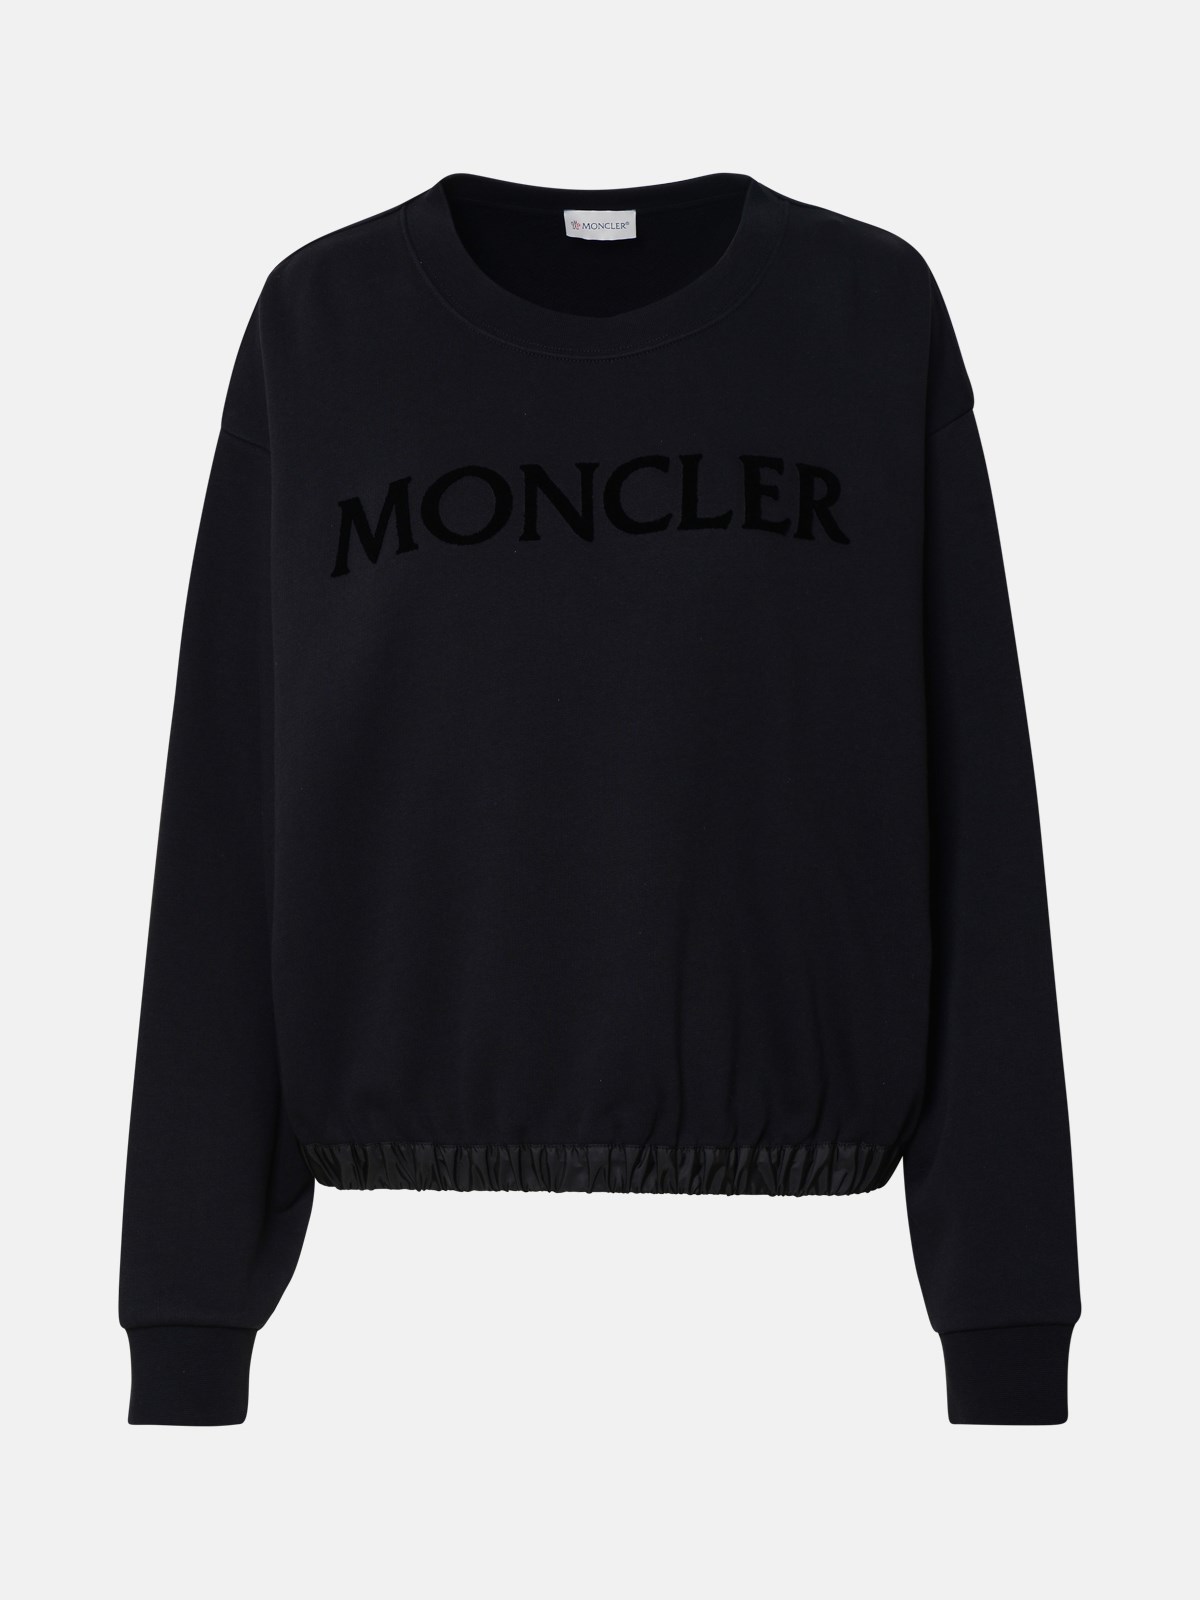 Moncler Kids' Black Cotton Blend Sweatshirt